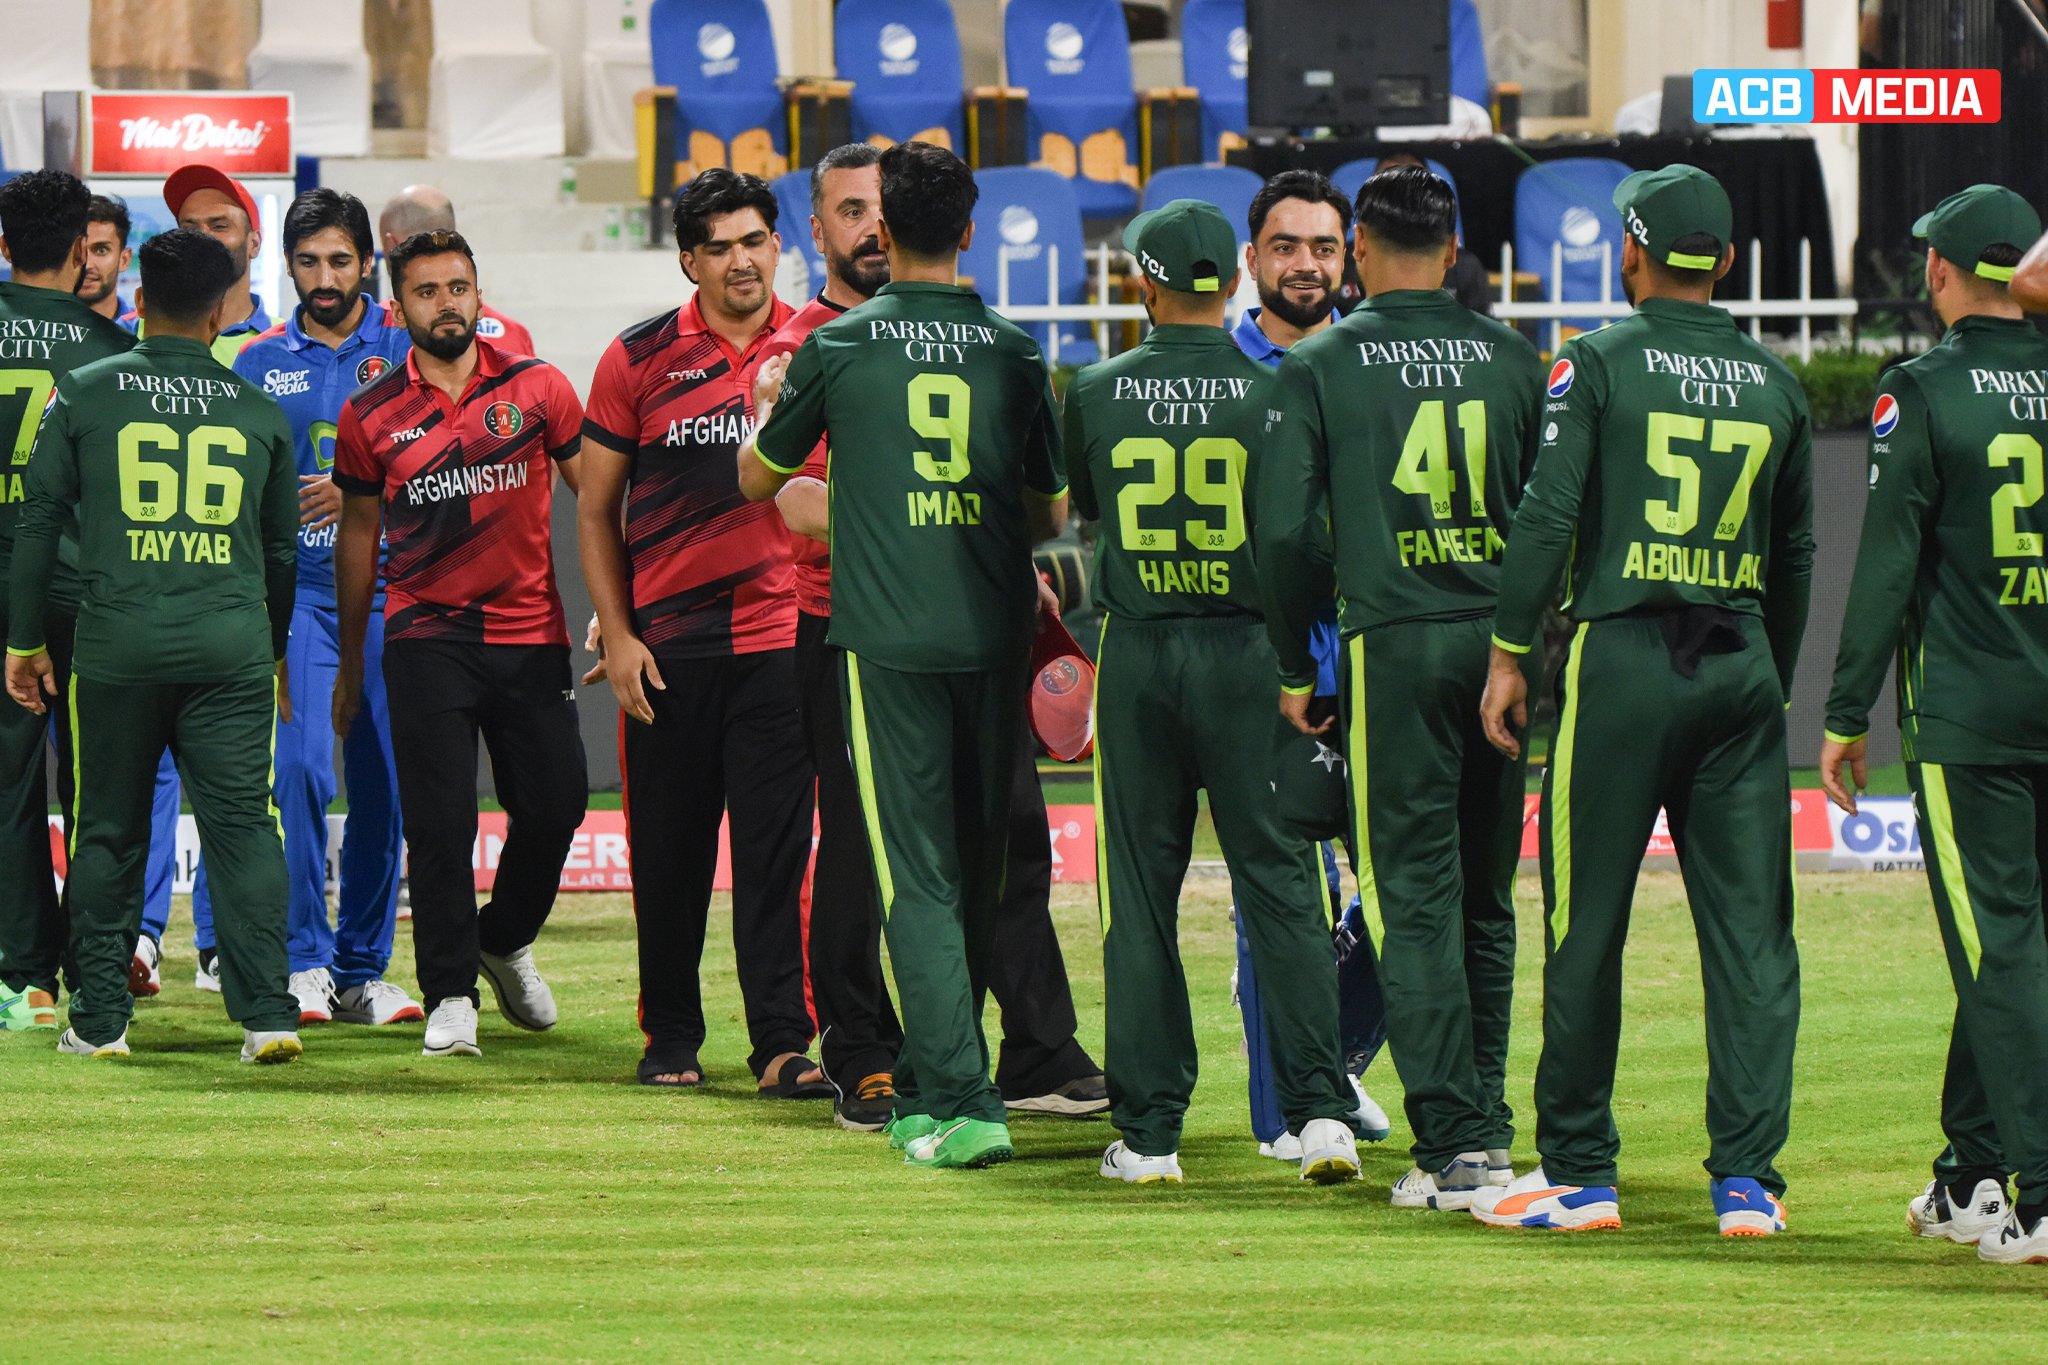 PAK vs AFG | Twitter trolls Pakistan as Afghanistan shock them with maiden win